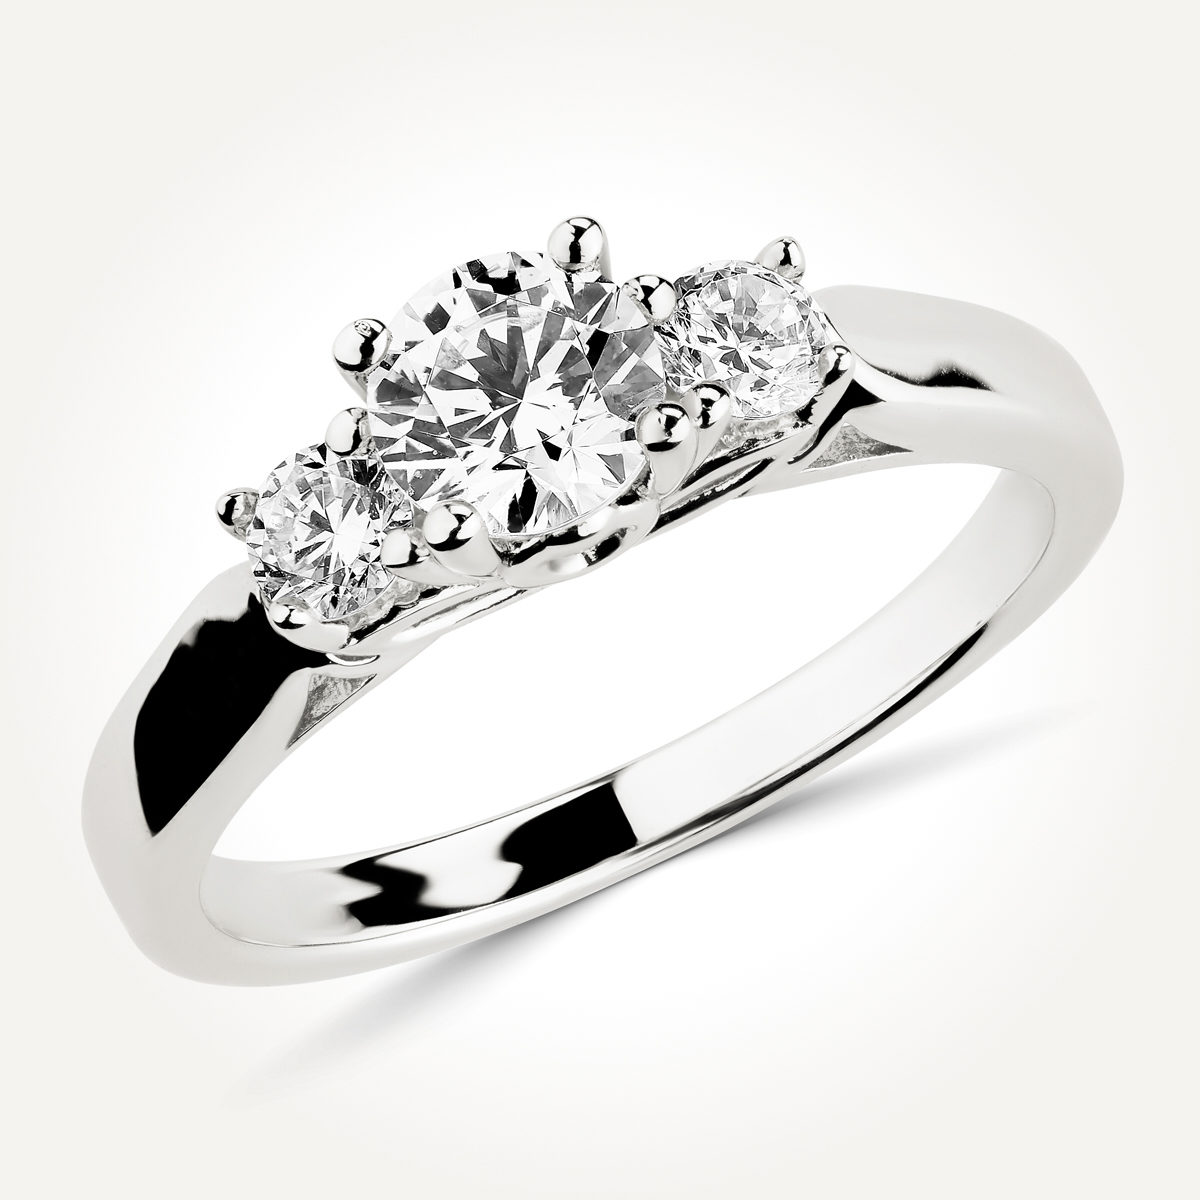 Multi Stone Diamond Engagement Ring - Style 7606